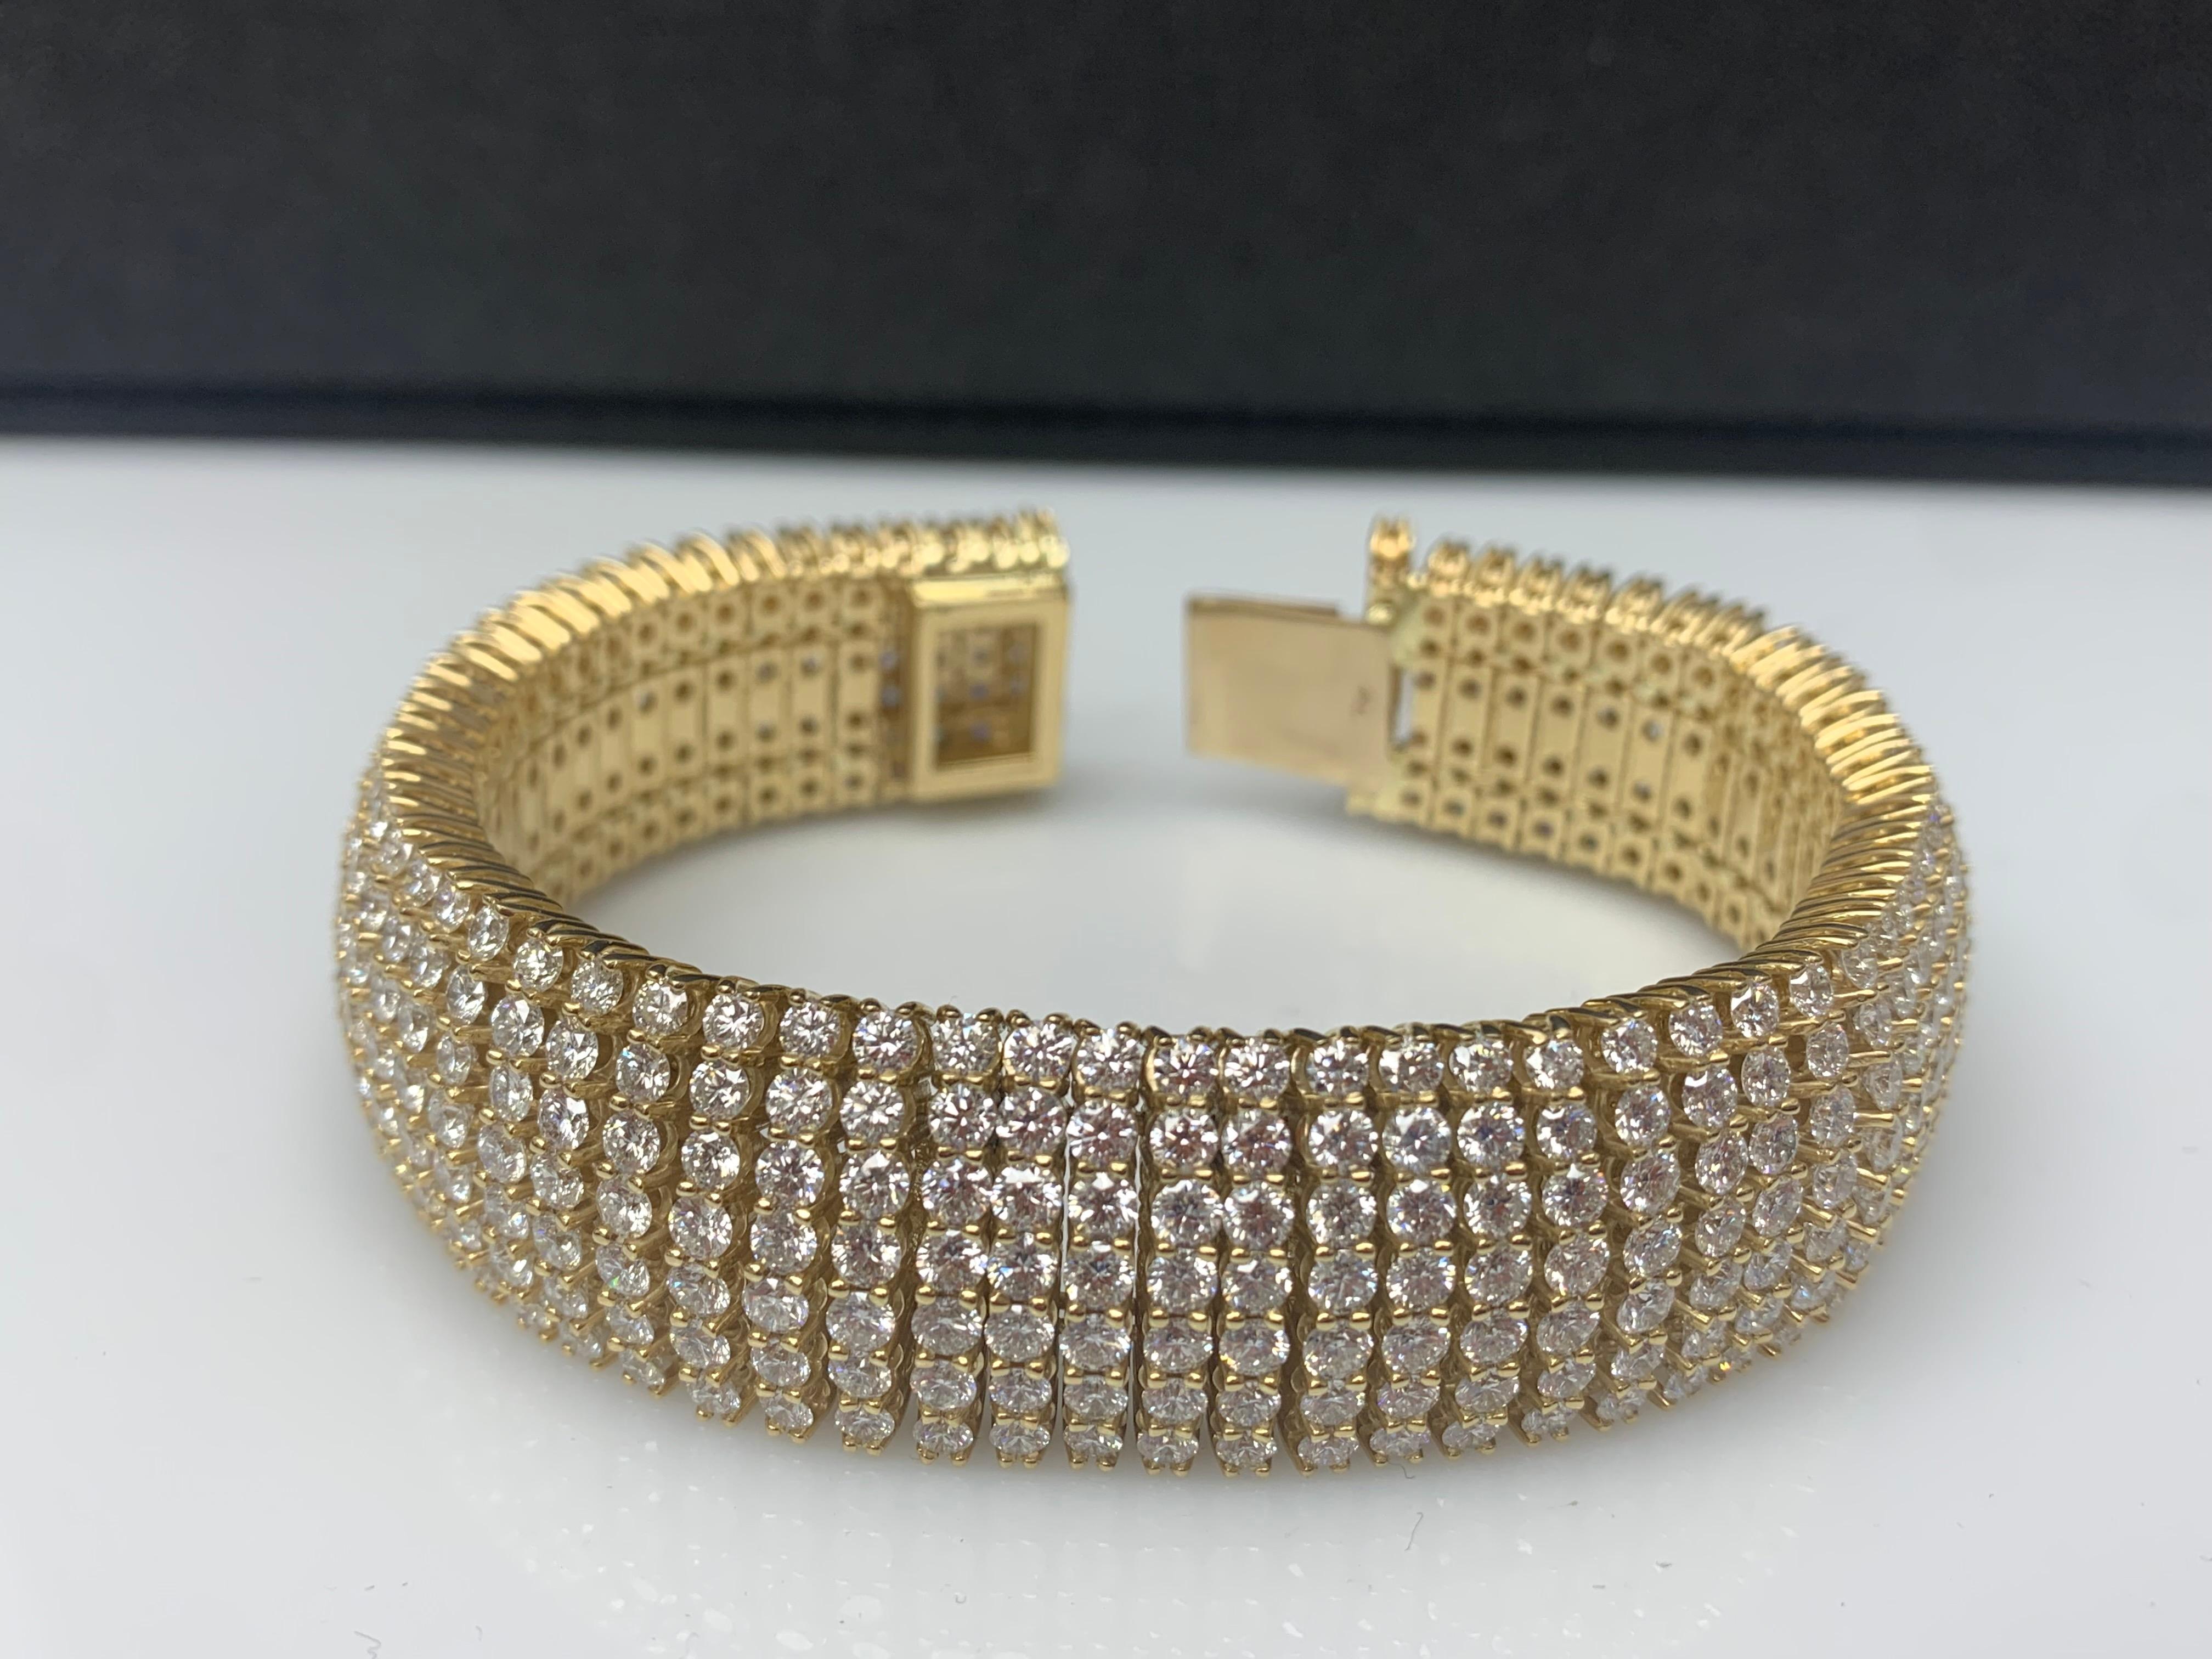 30.18 Carat Round Diamond Multi-Row Tennis Bracelet in 14K Yellow Gold For Sale 3